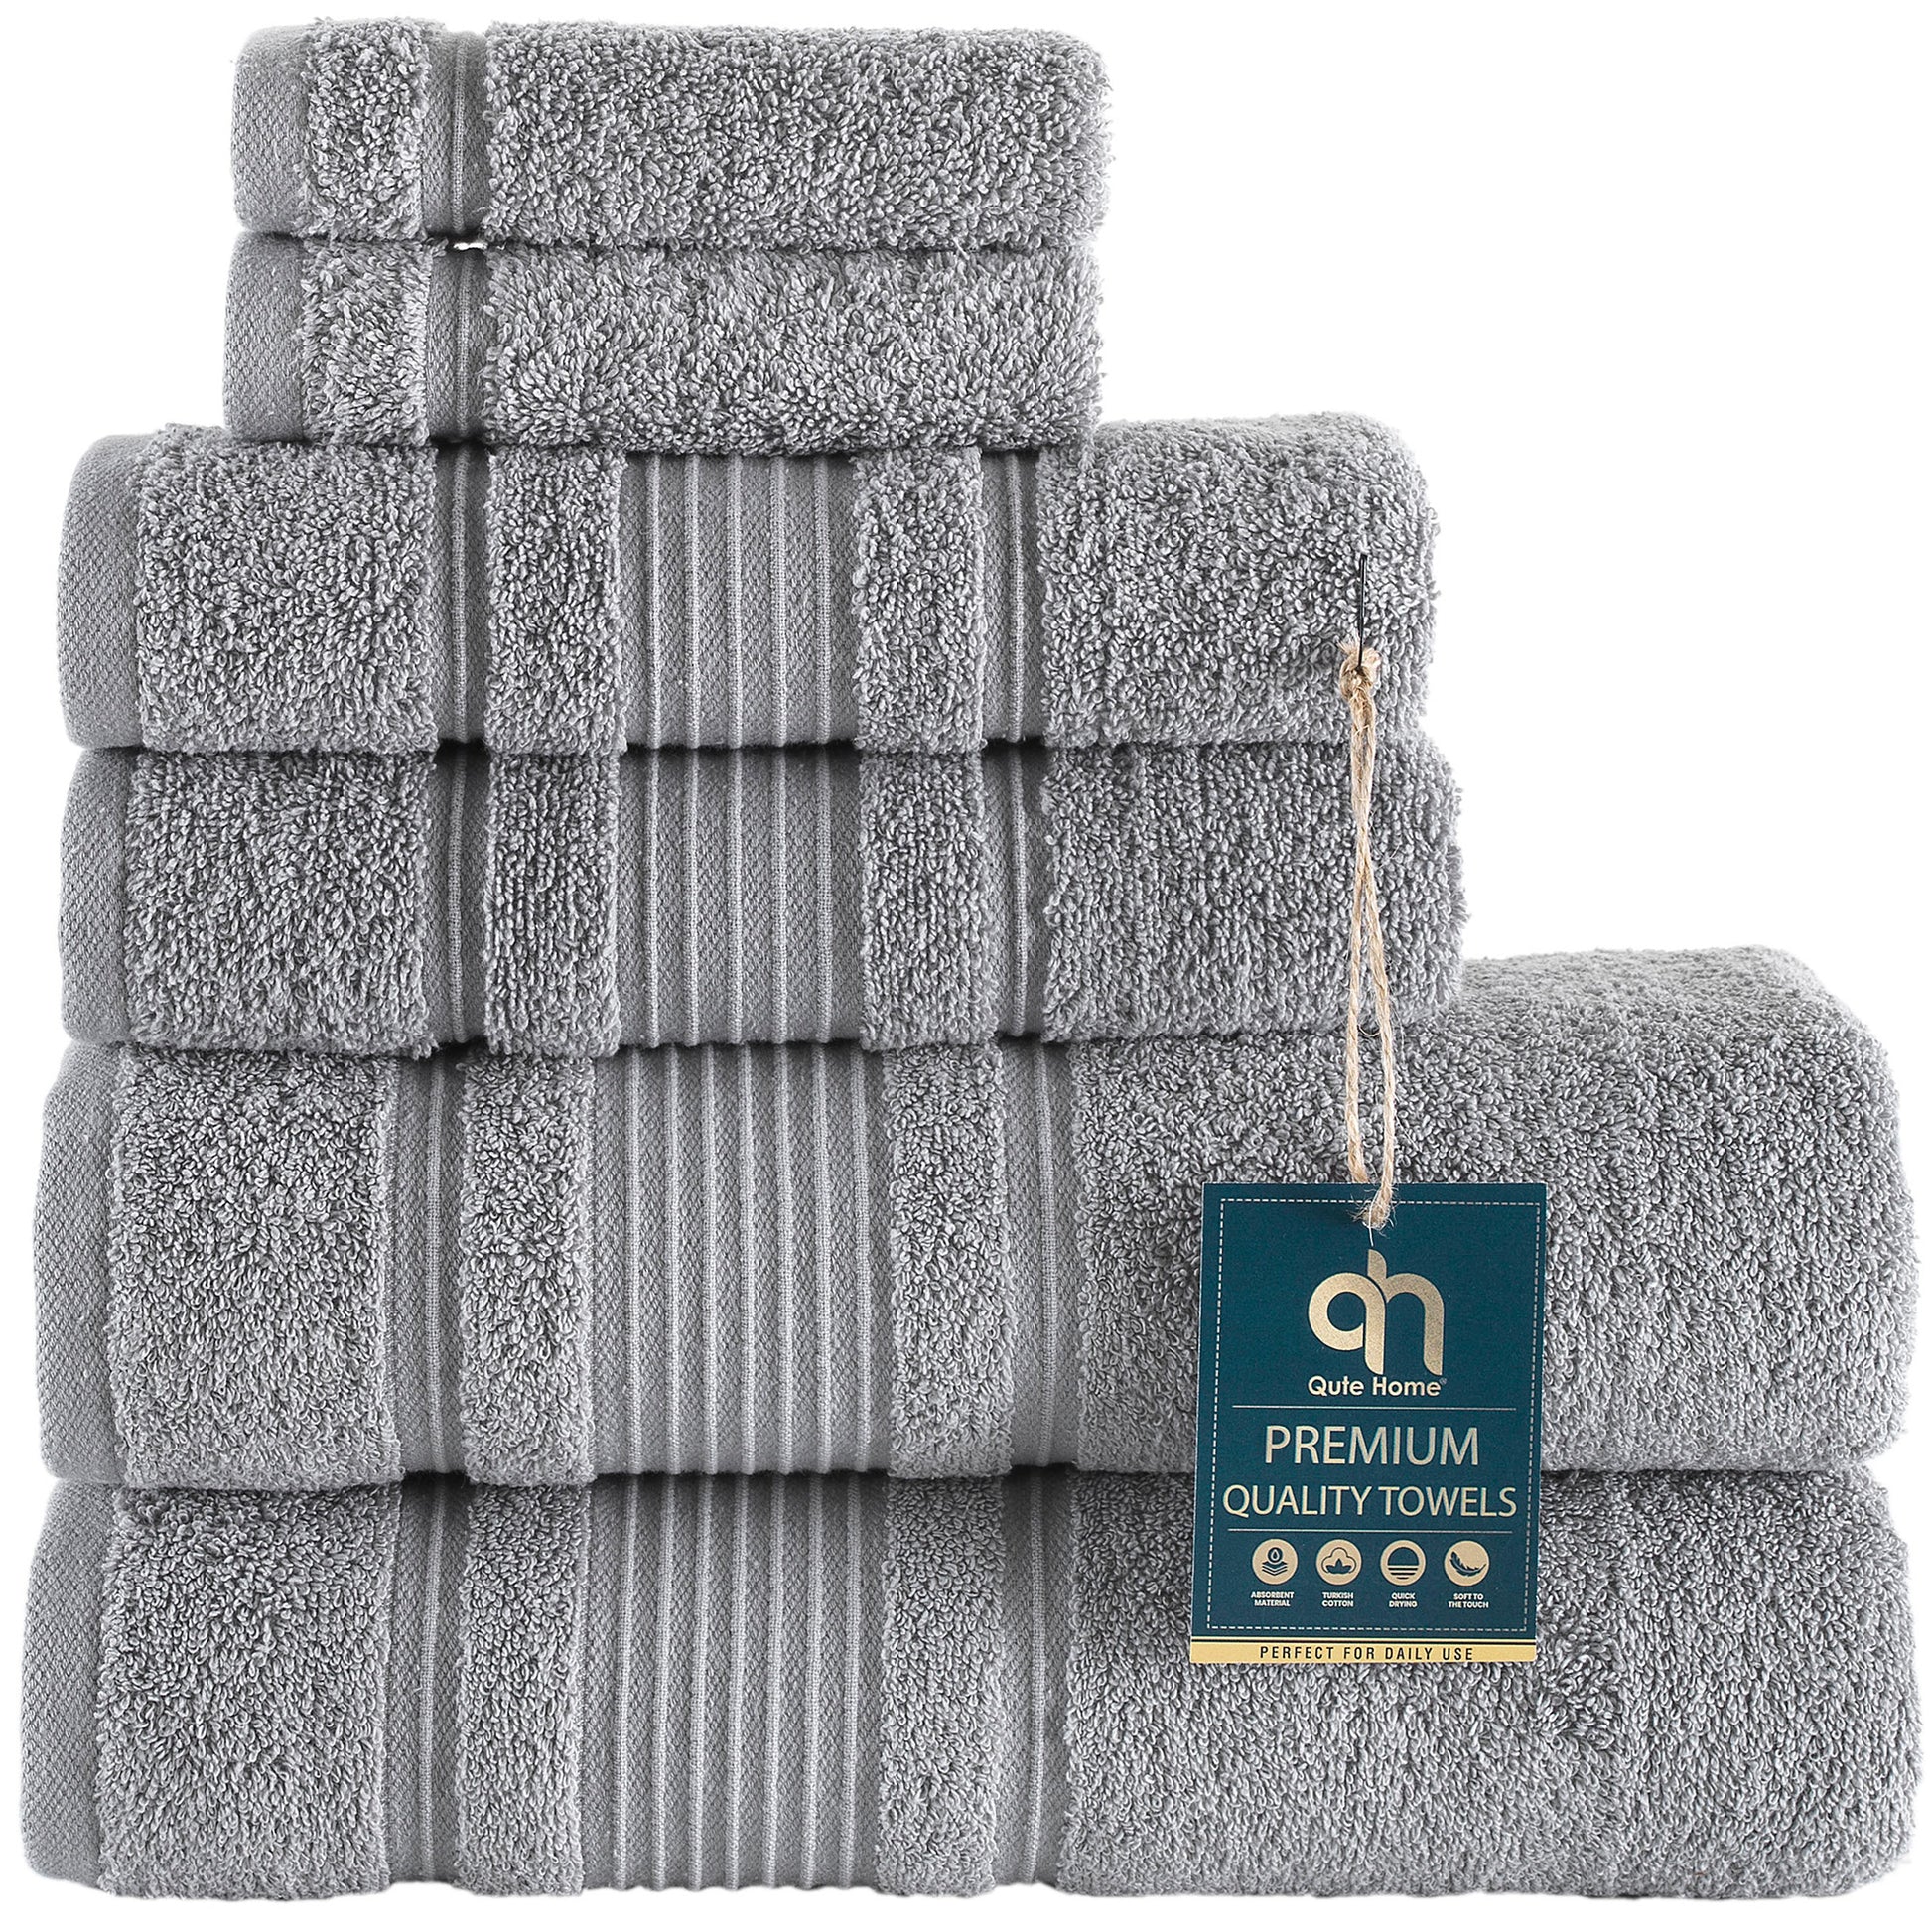 Hotel Quality 100% Turkish Cotton 6 Piece Towel Set Blue